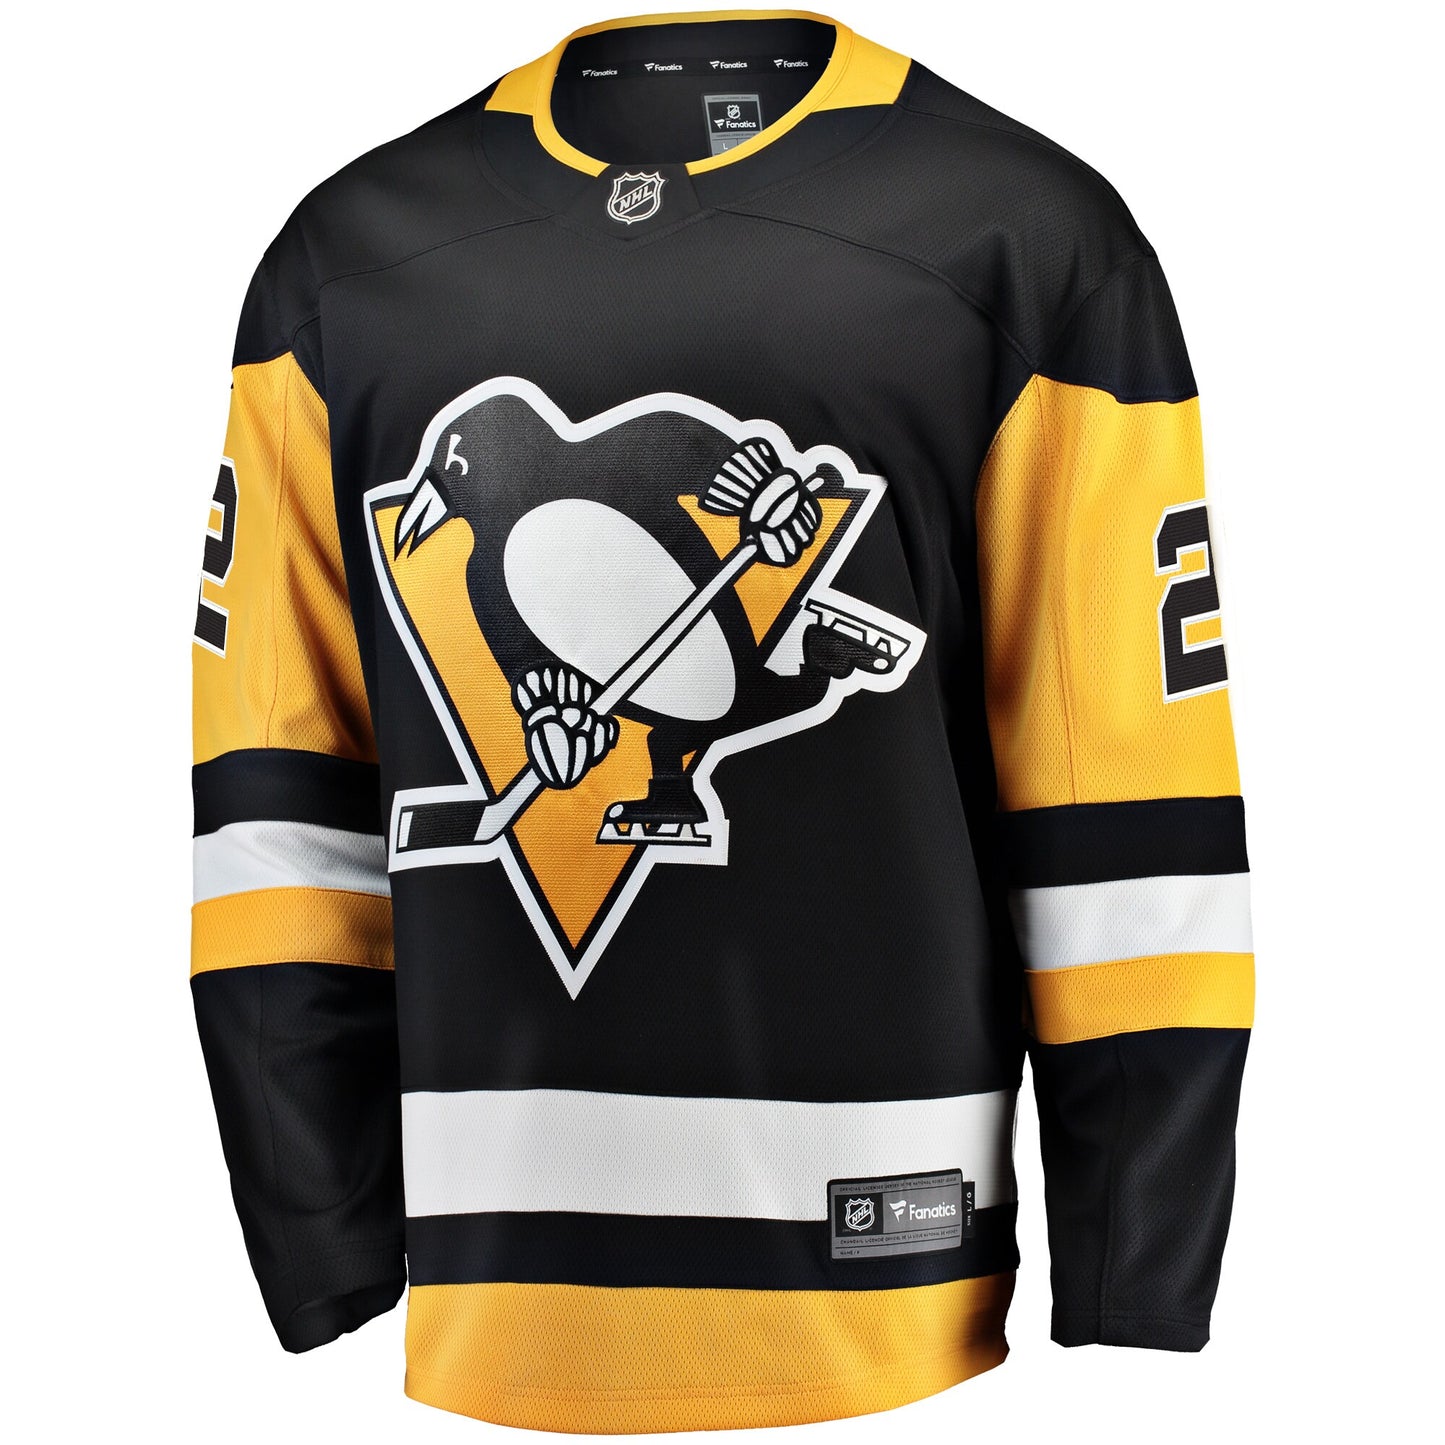 Chad Ruhwedel Pittsburgh Penguins Fanatics Branded Home Breakaway Player Jersey - Black